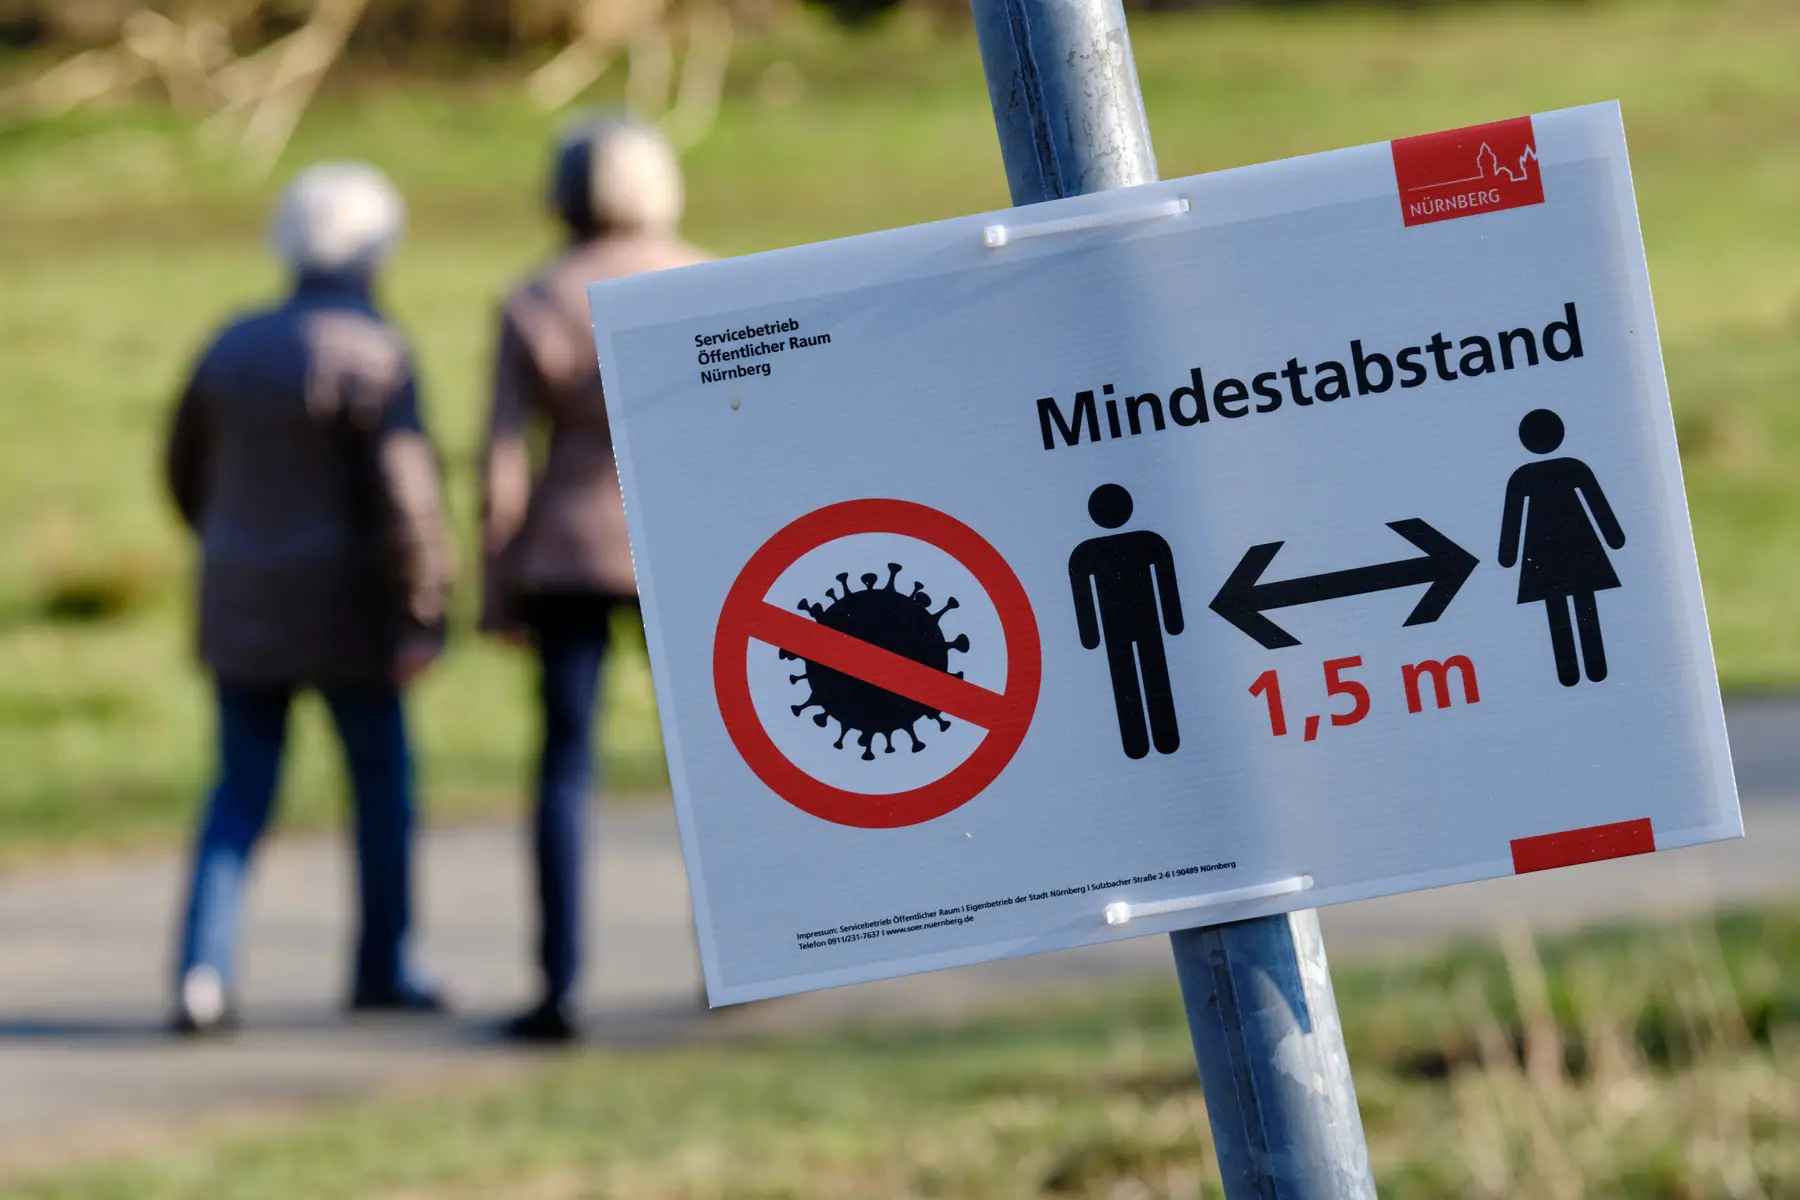 Social distancing sign during the coronavirus pandemic in Nürnberg, Germany